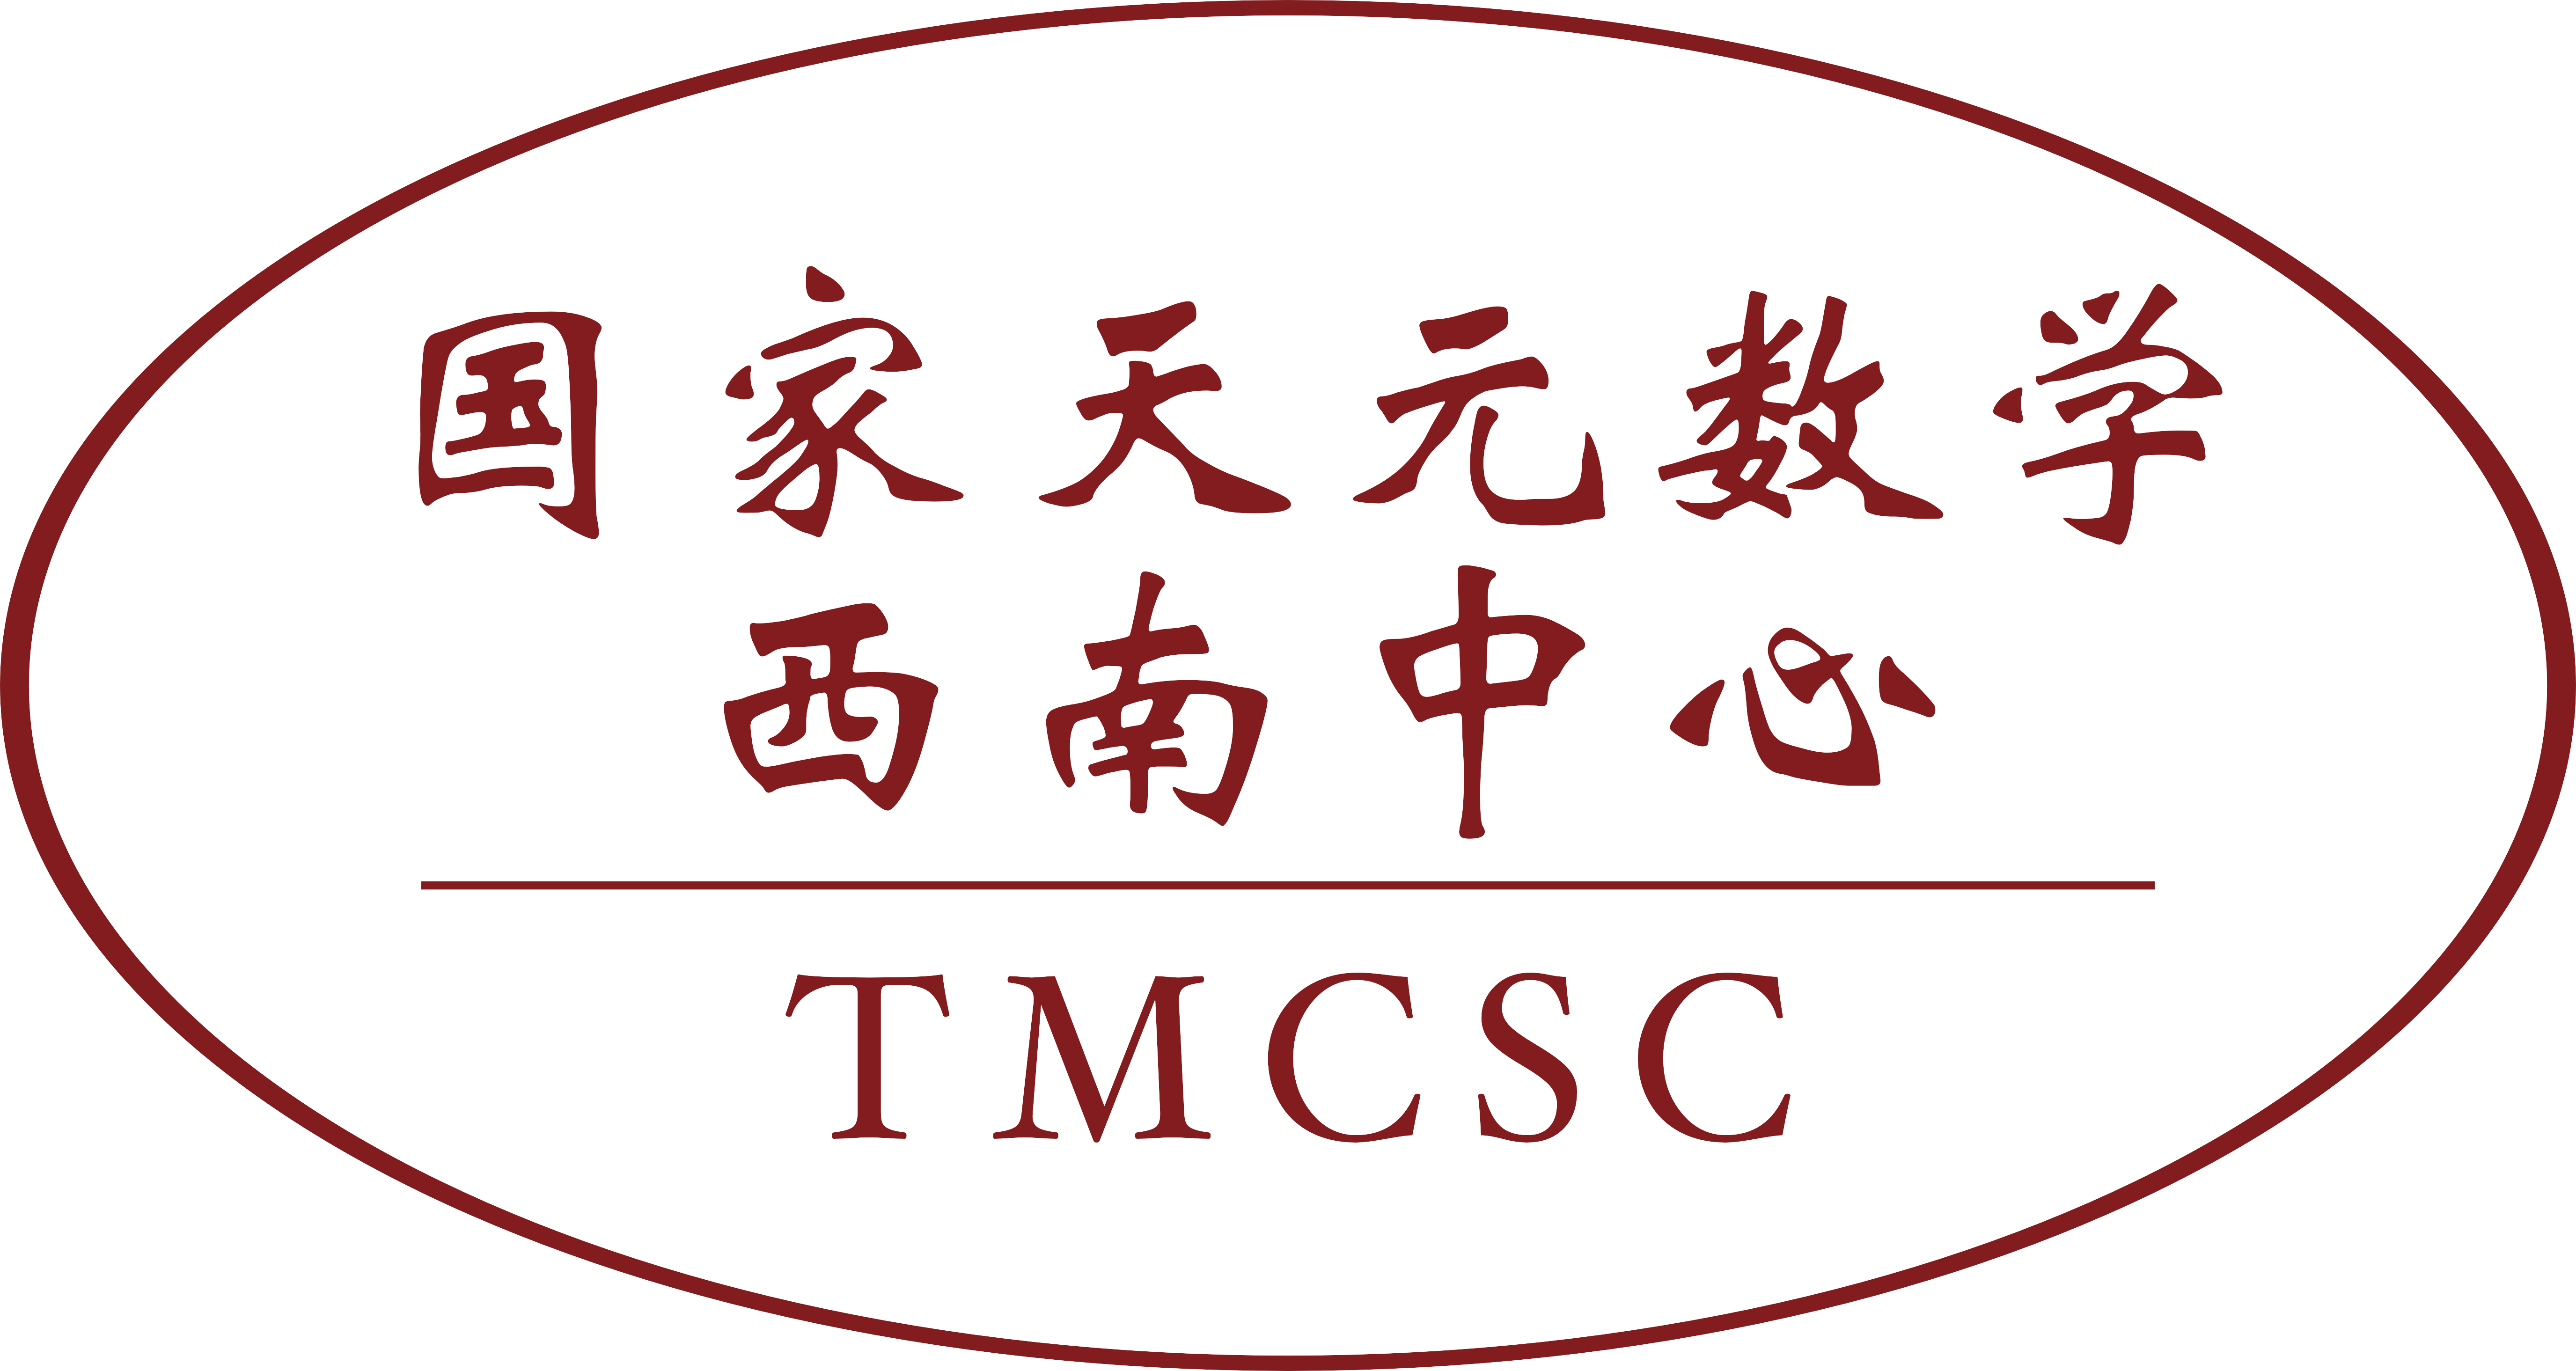 TMCSC